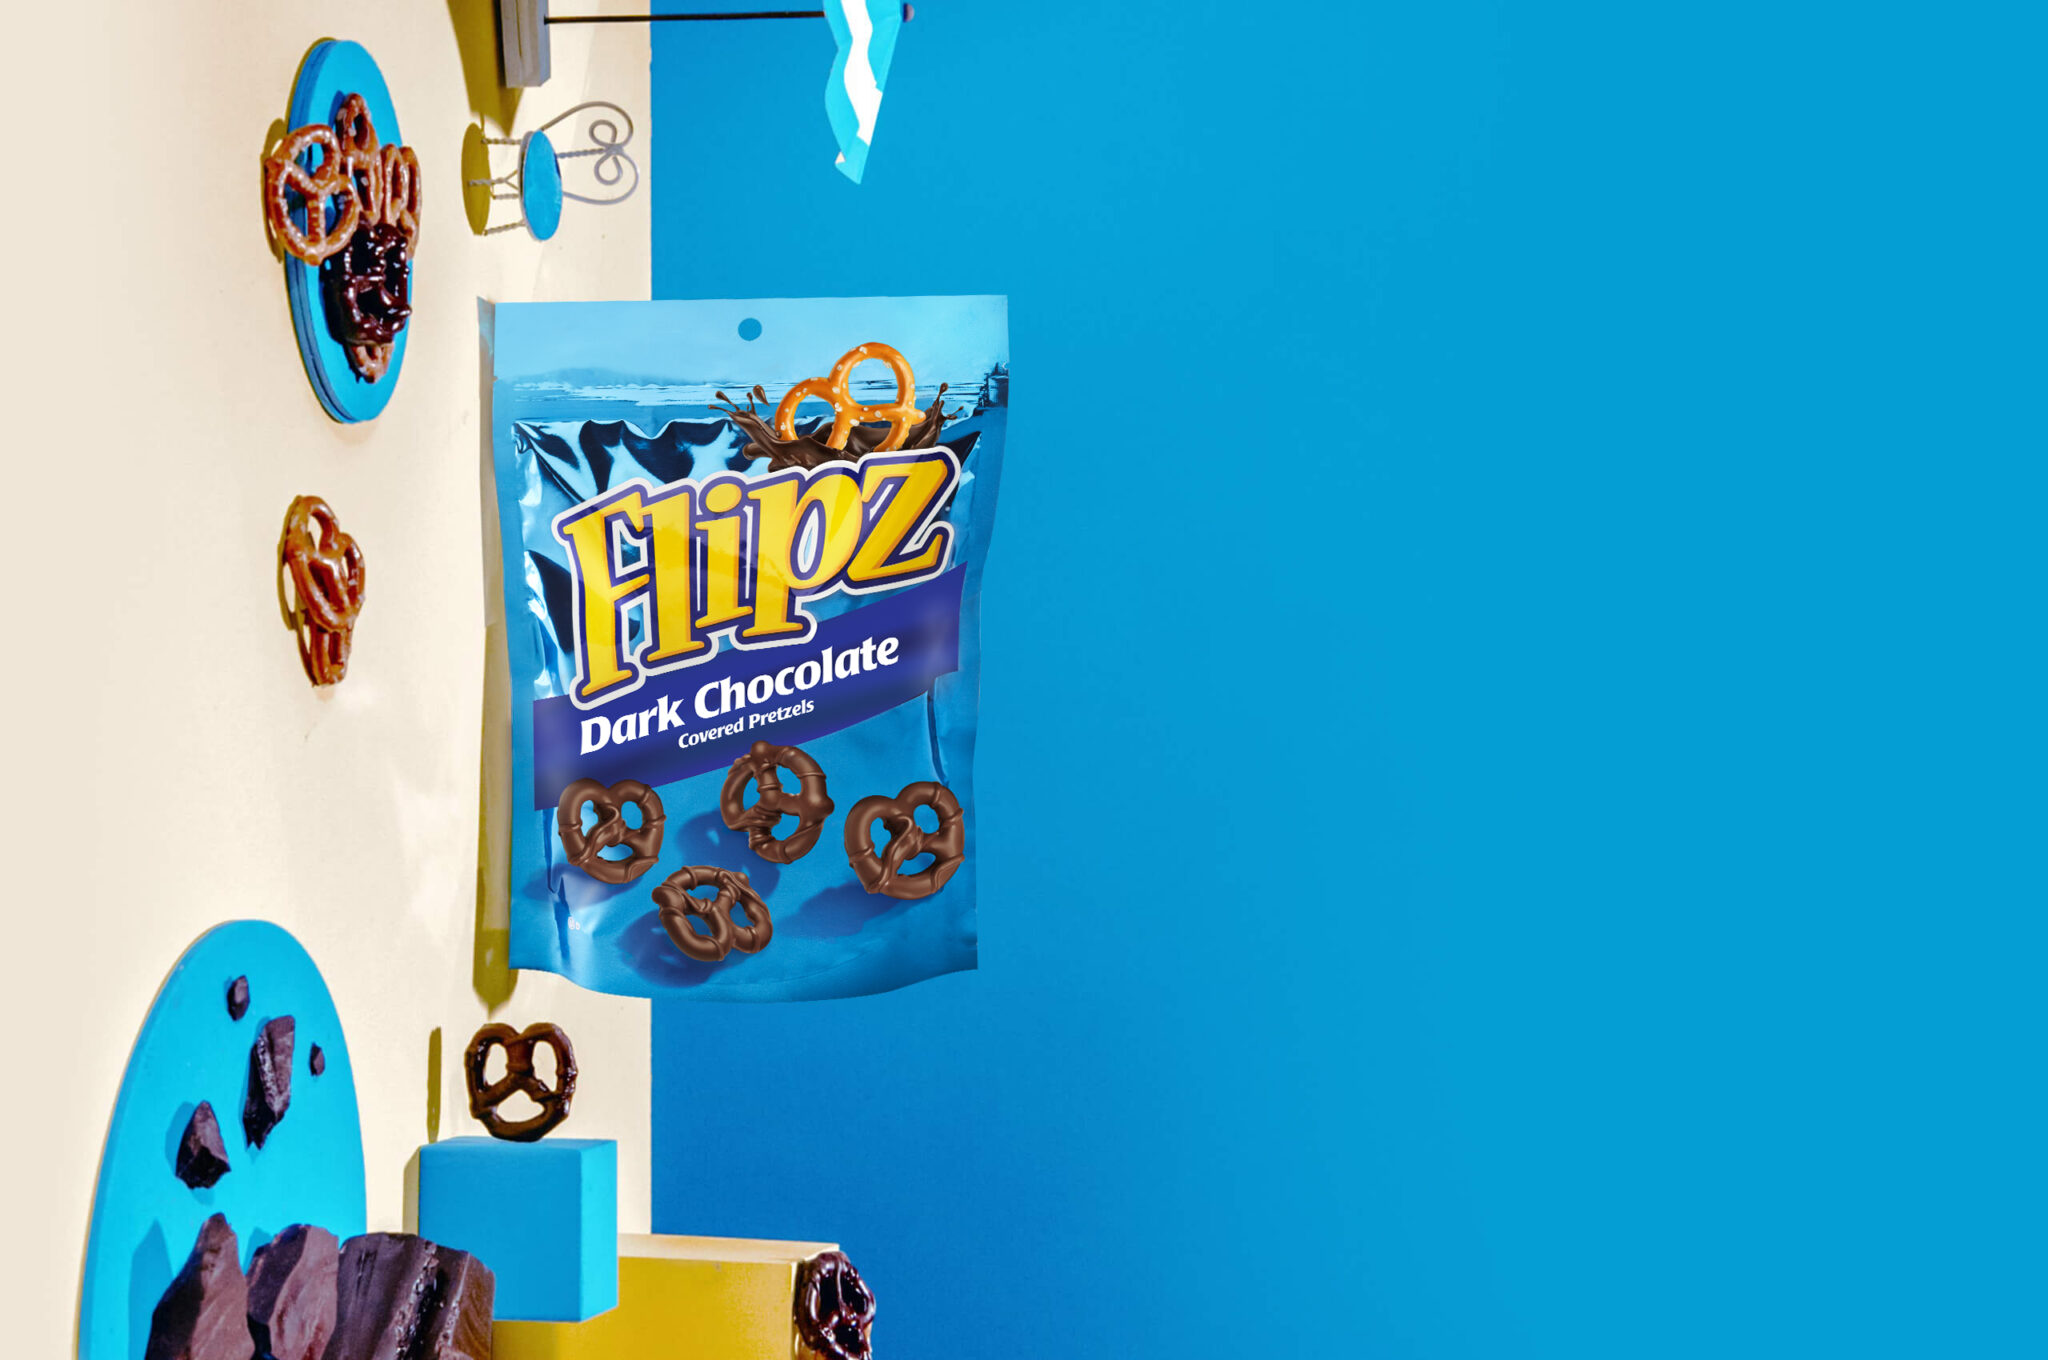 Bright blue bag of Flipz dark chocolate covered pretzels